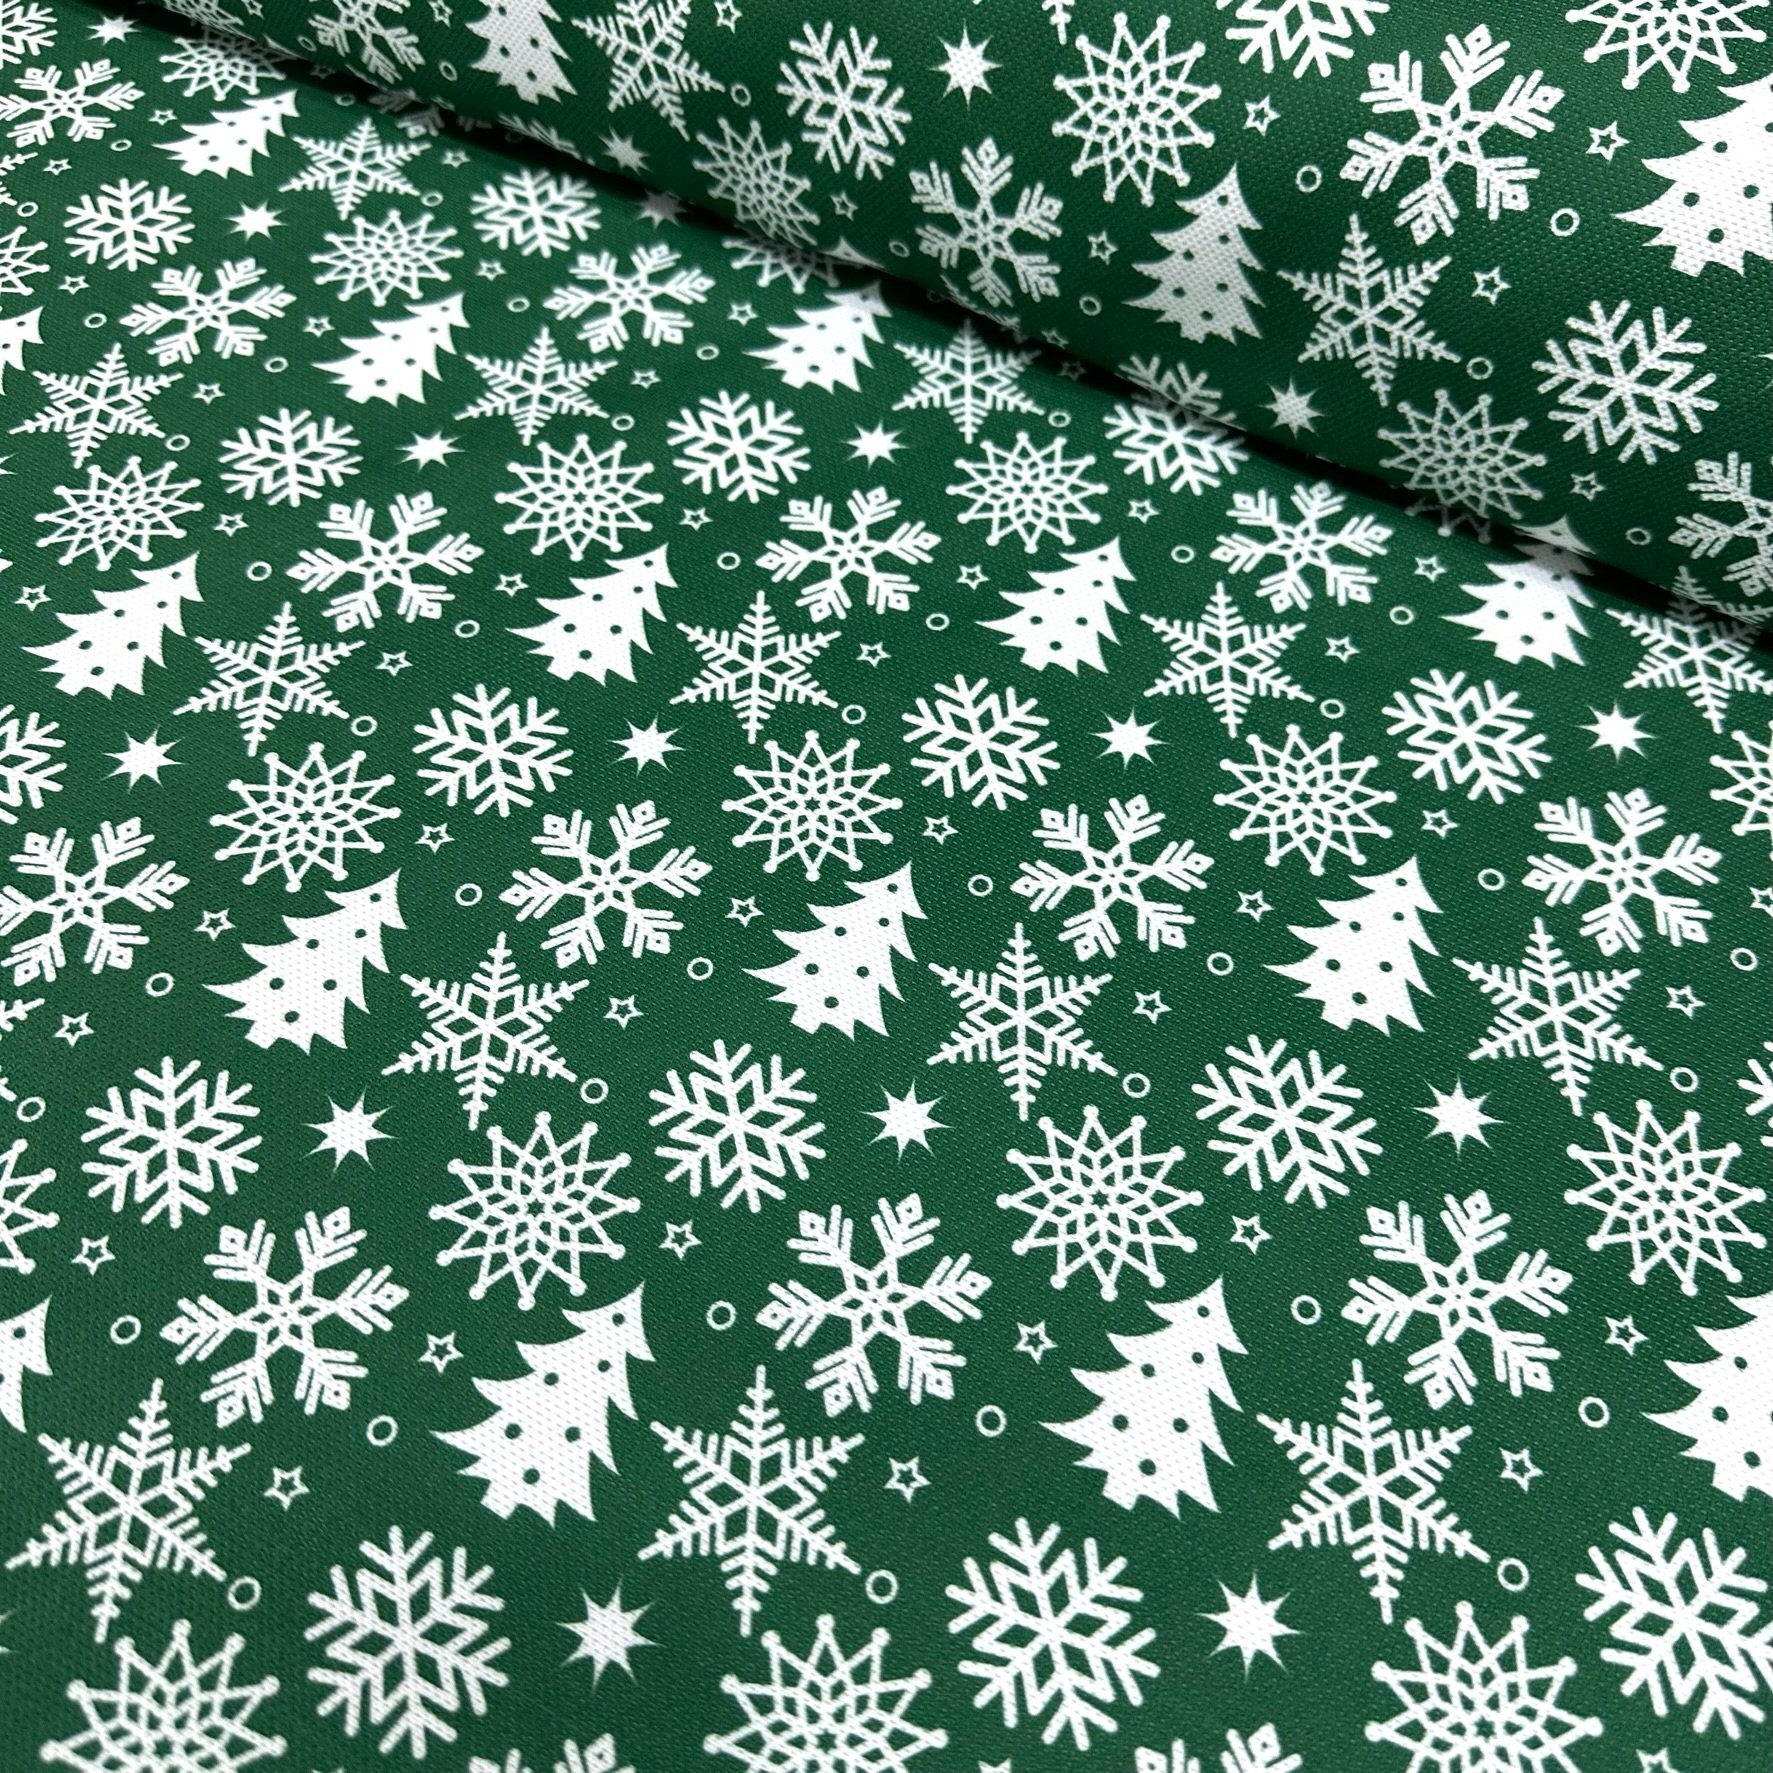 Small and Big Snowflakes Digital Printing Fabric